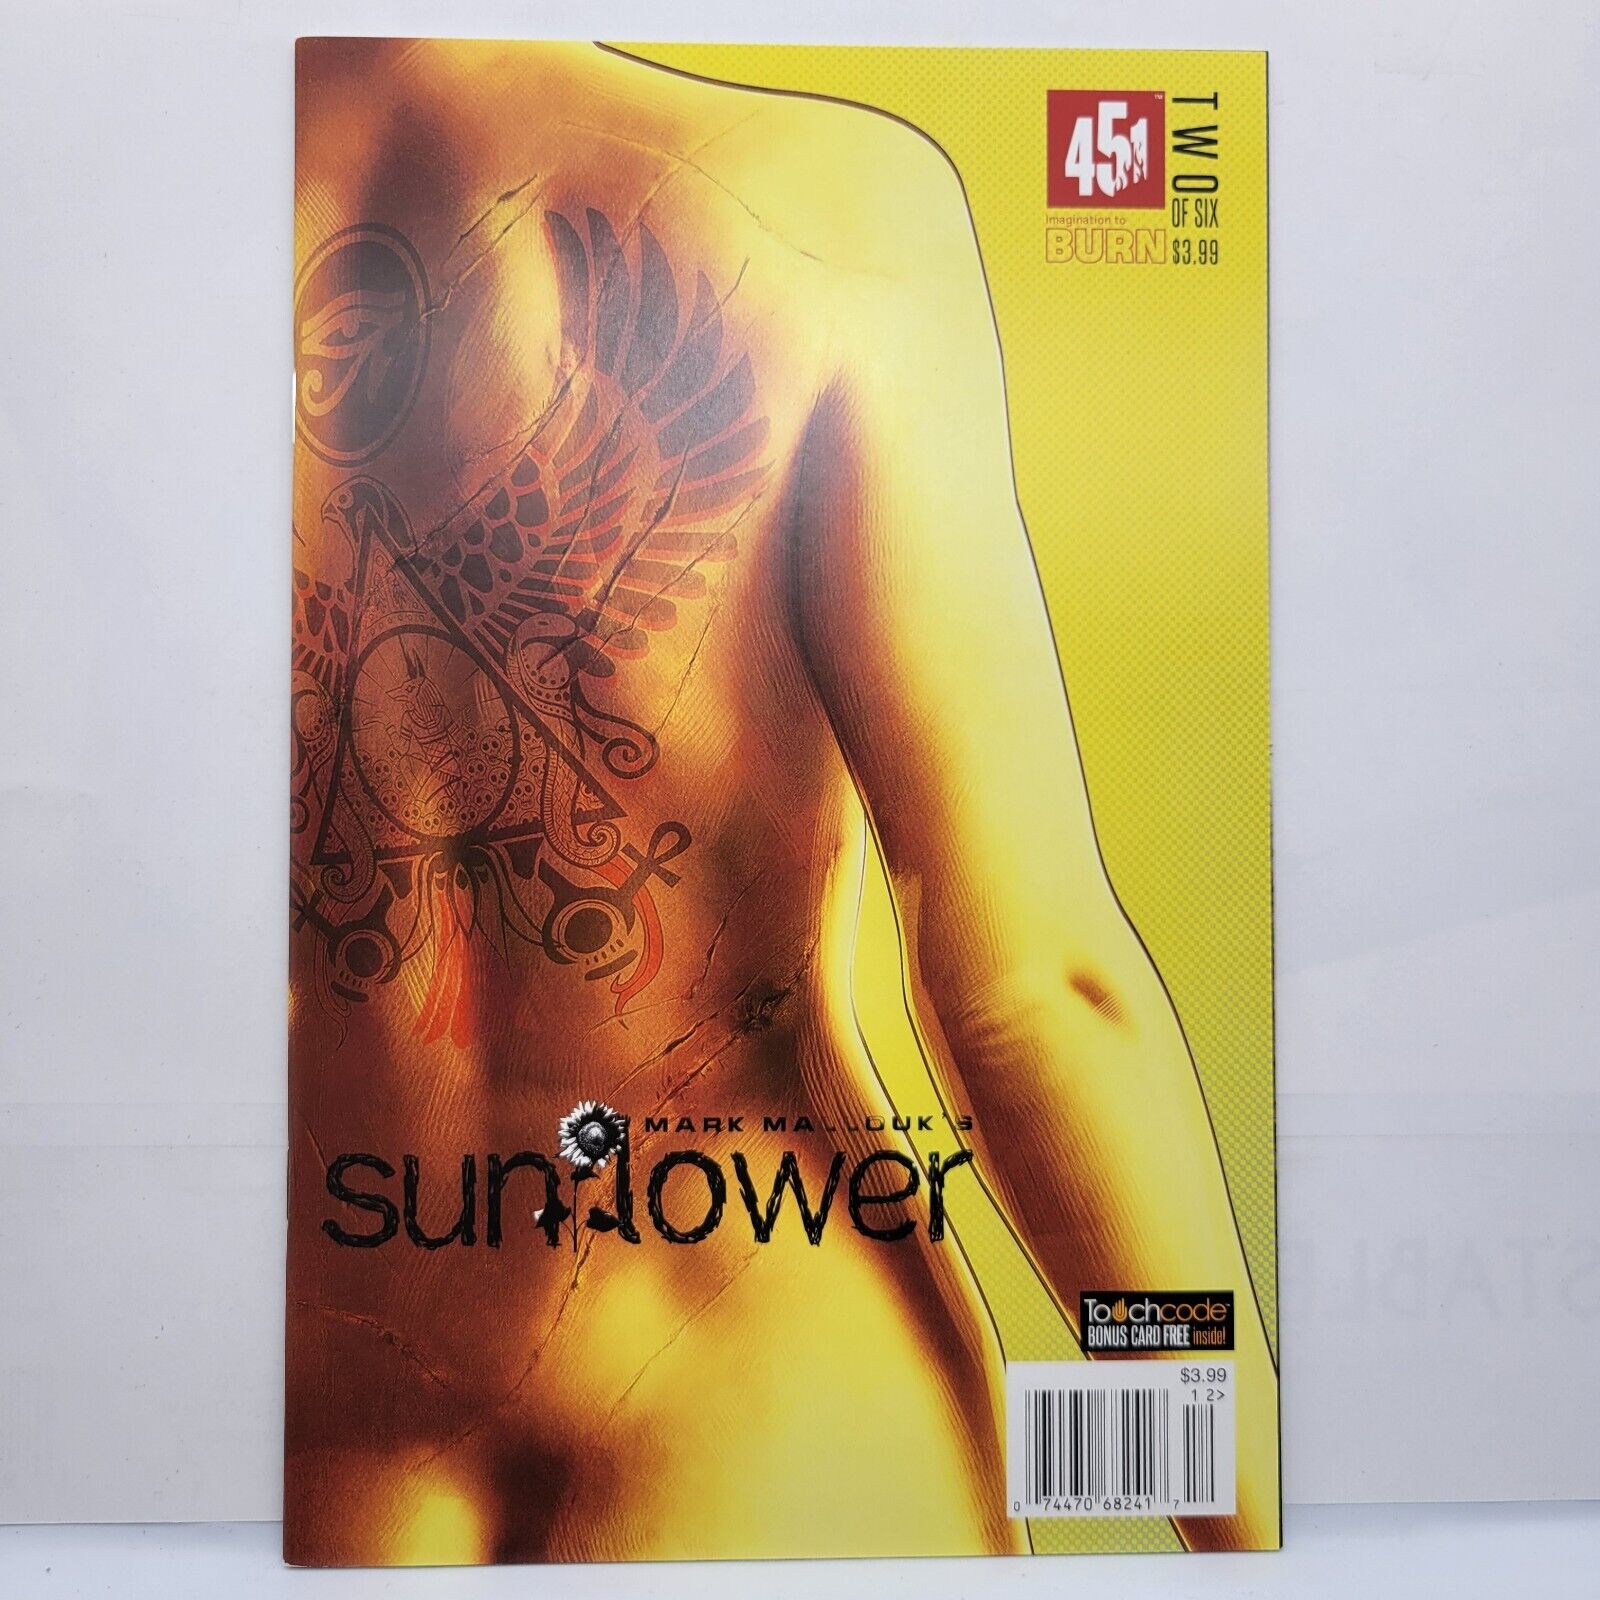 Sunflower #2 2015 451 Media Group Comics